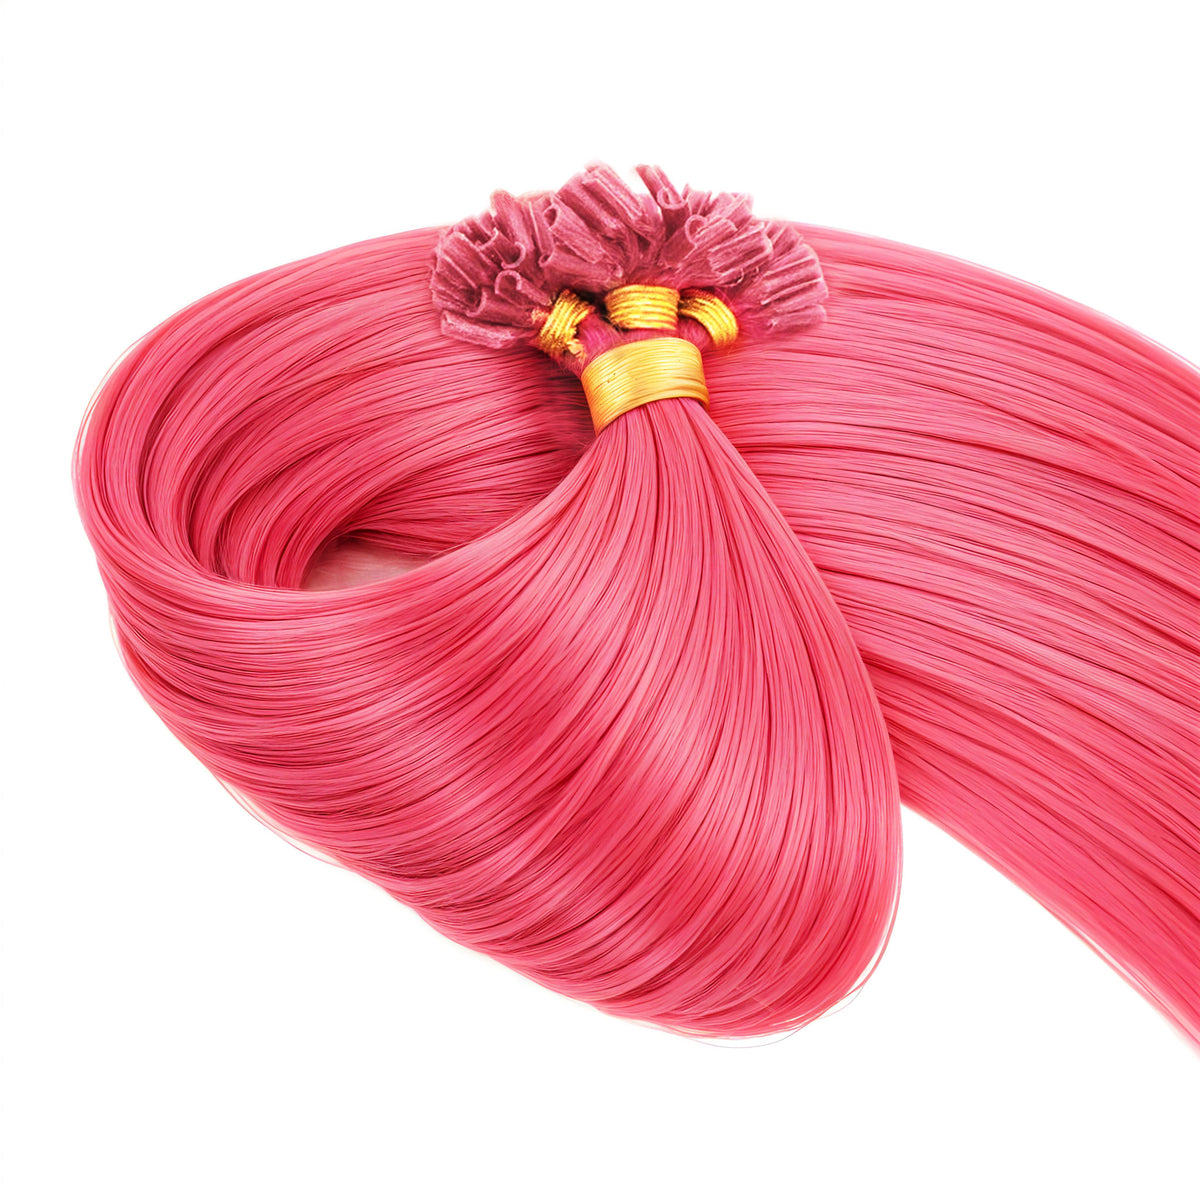 Pink Hair Extensions - Keratin Bonds hair Extensions